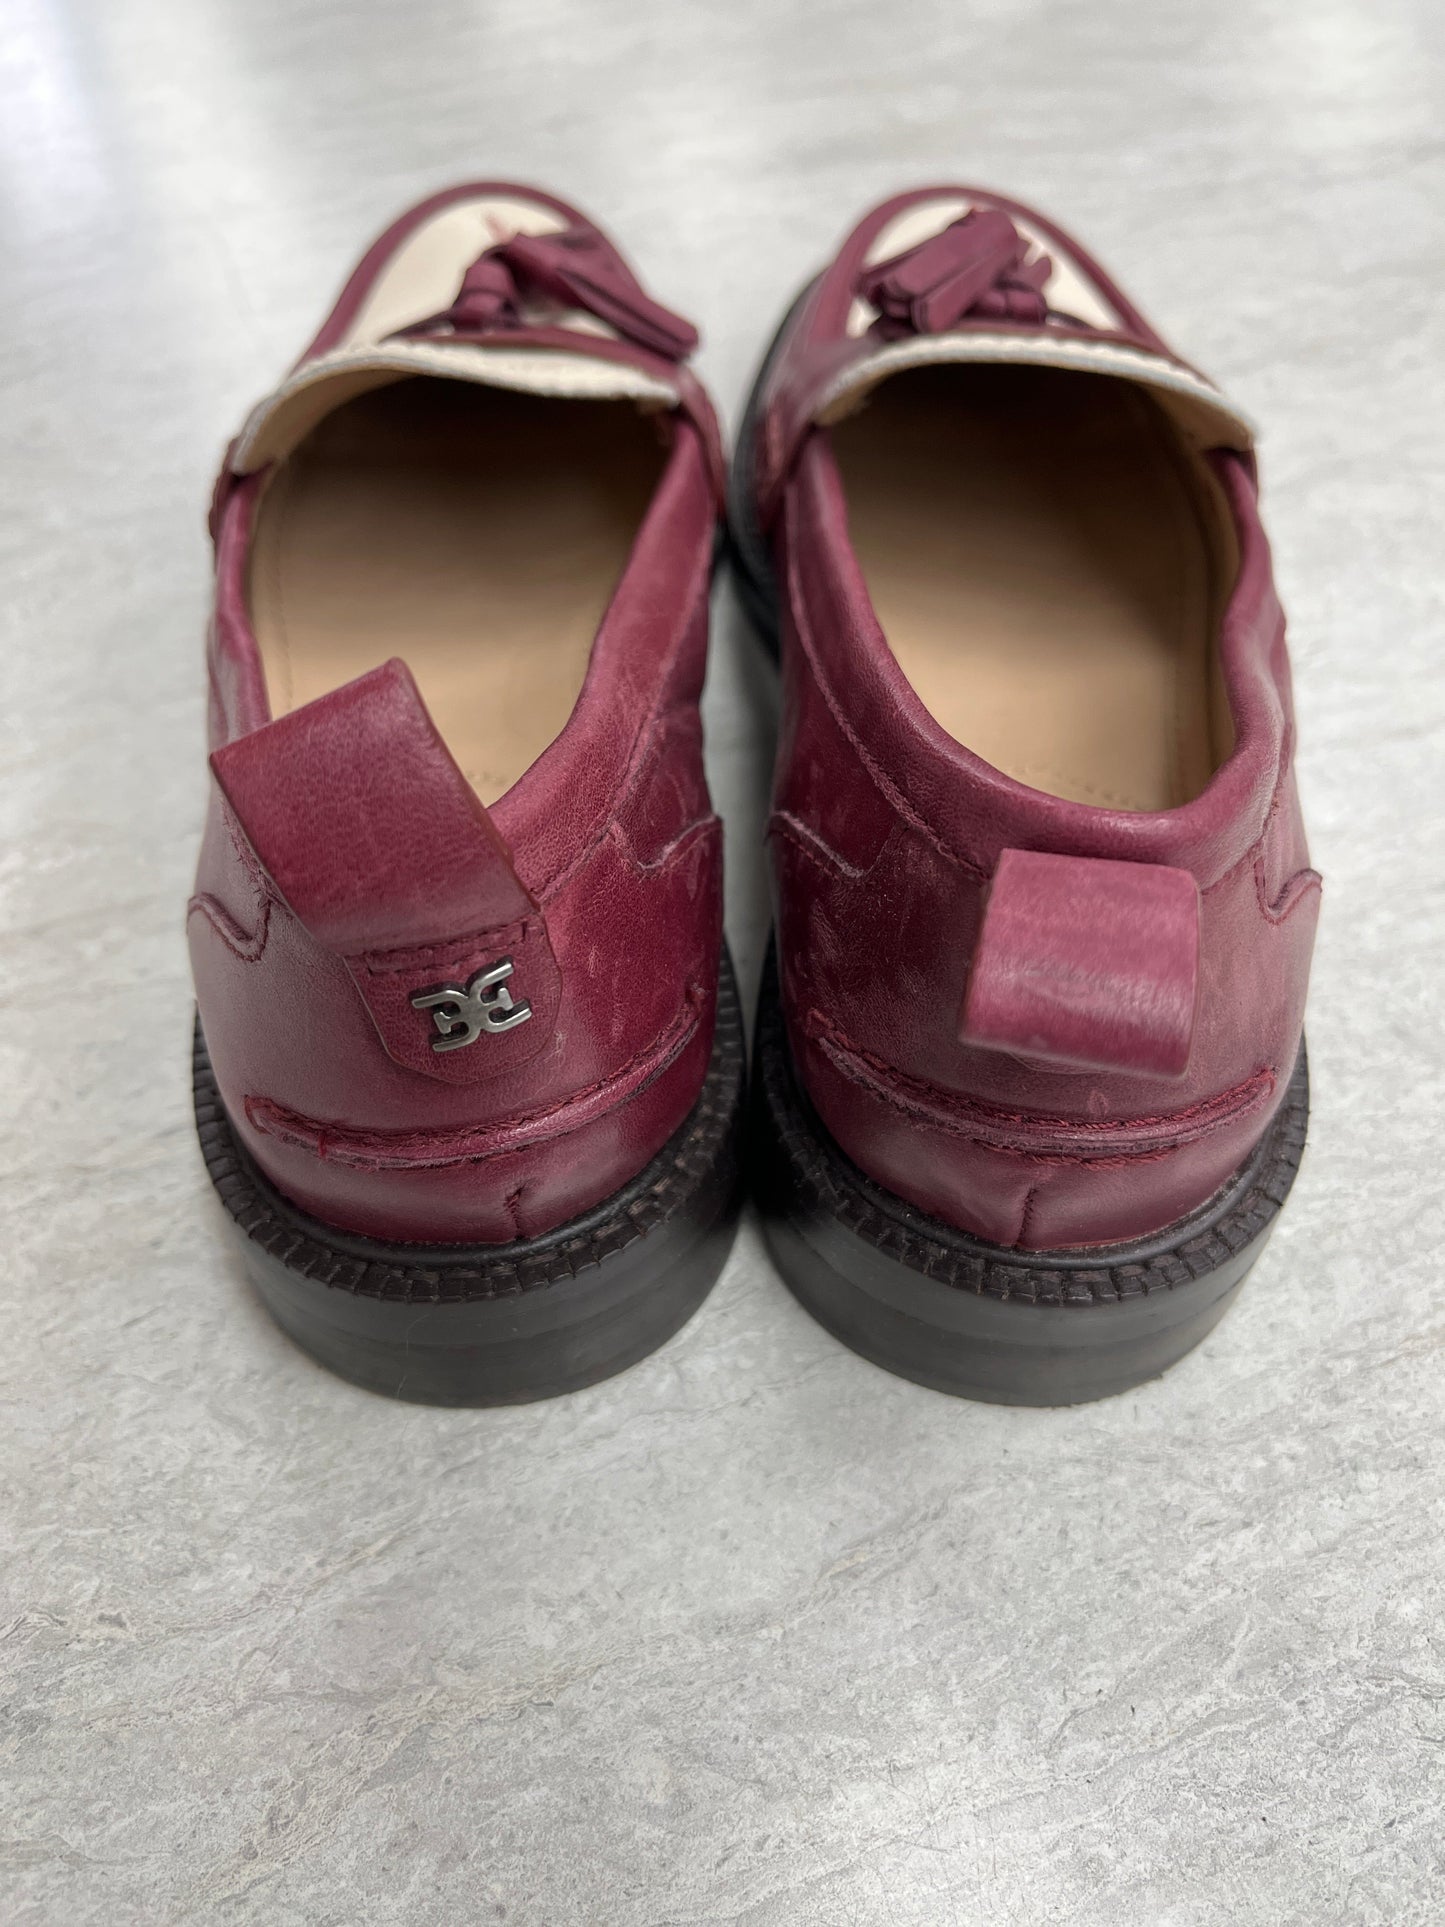 Cream & Red Shoes Flats Sam Edelman, Size 6.5